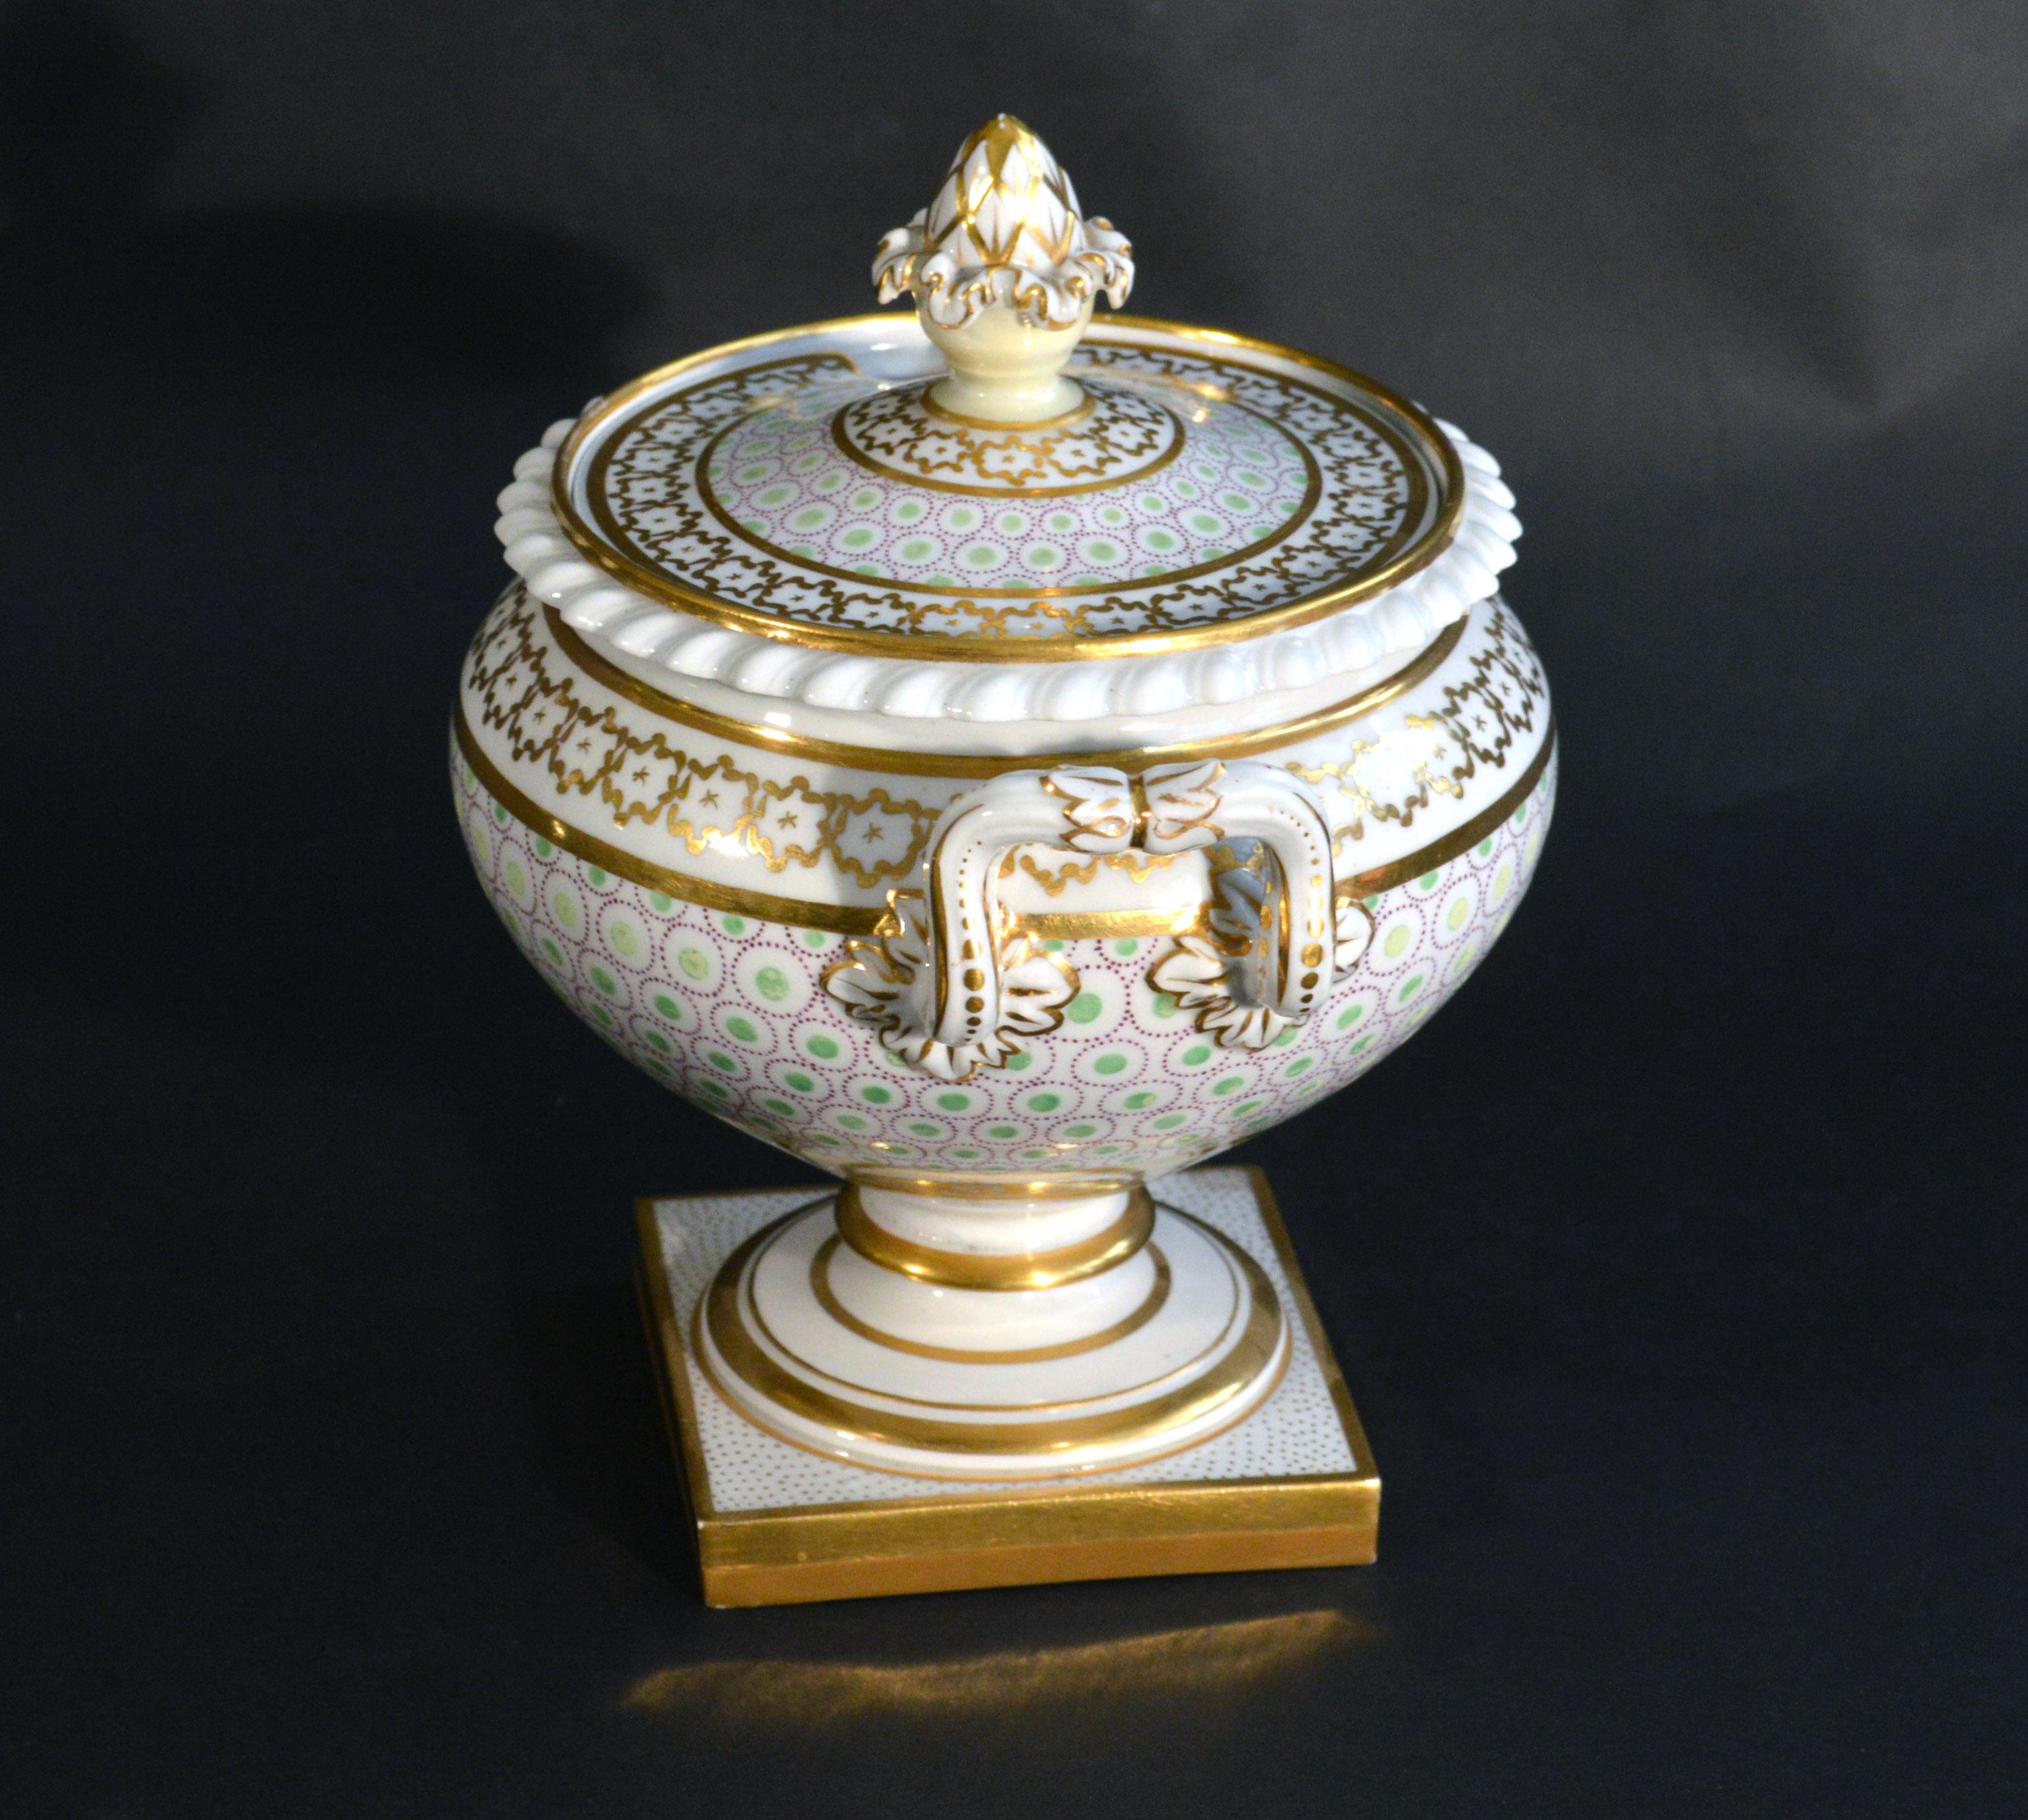 English Regency Flight, Barr & Barr Worcester Porcelain Dessert Service, circa 1820